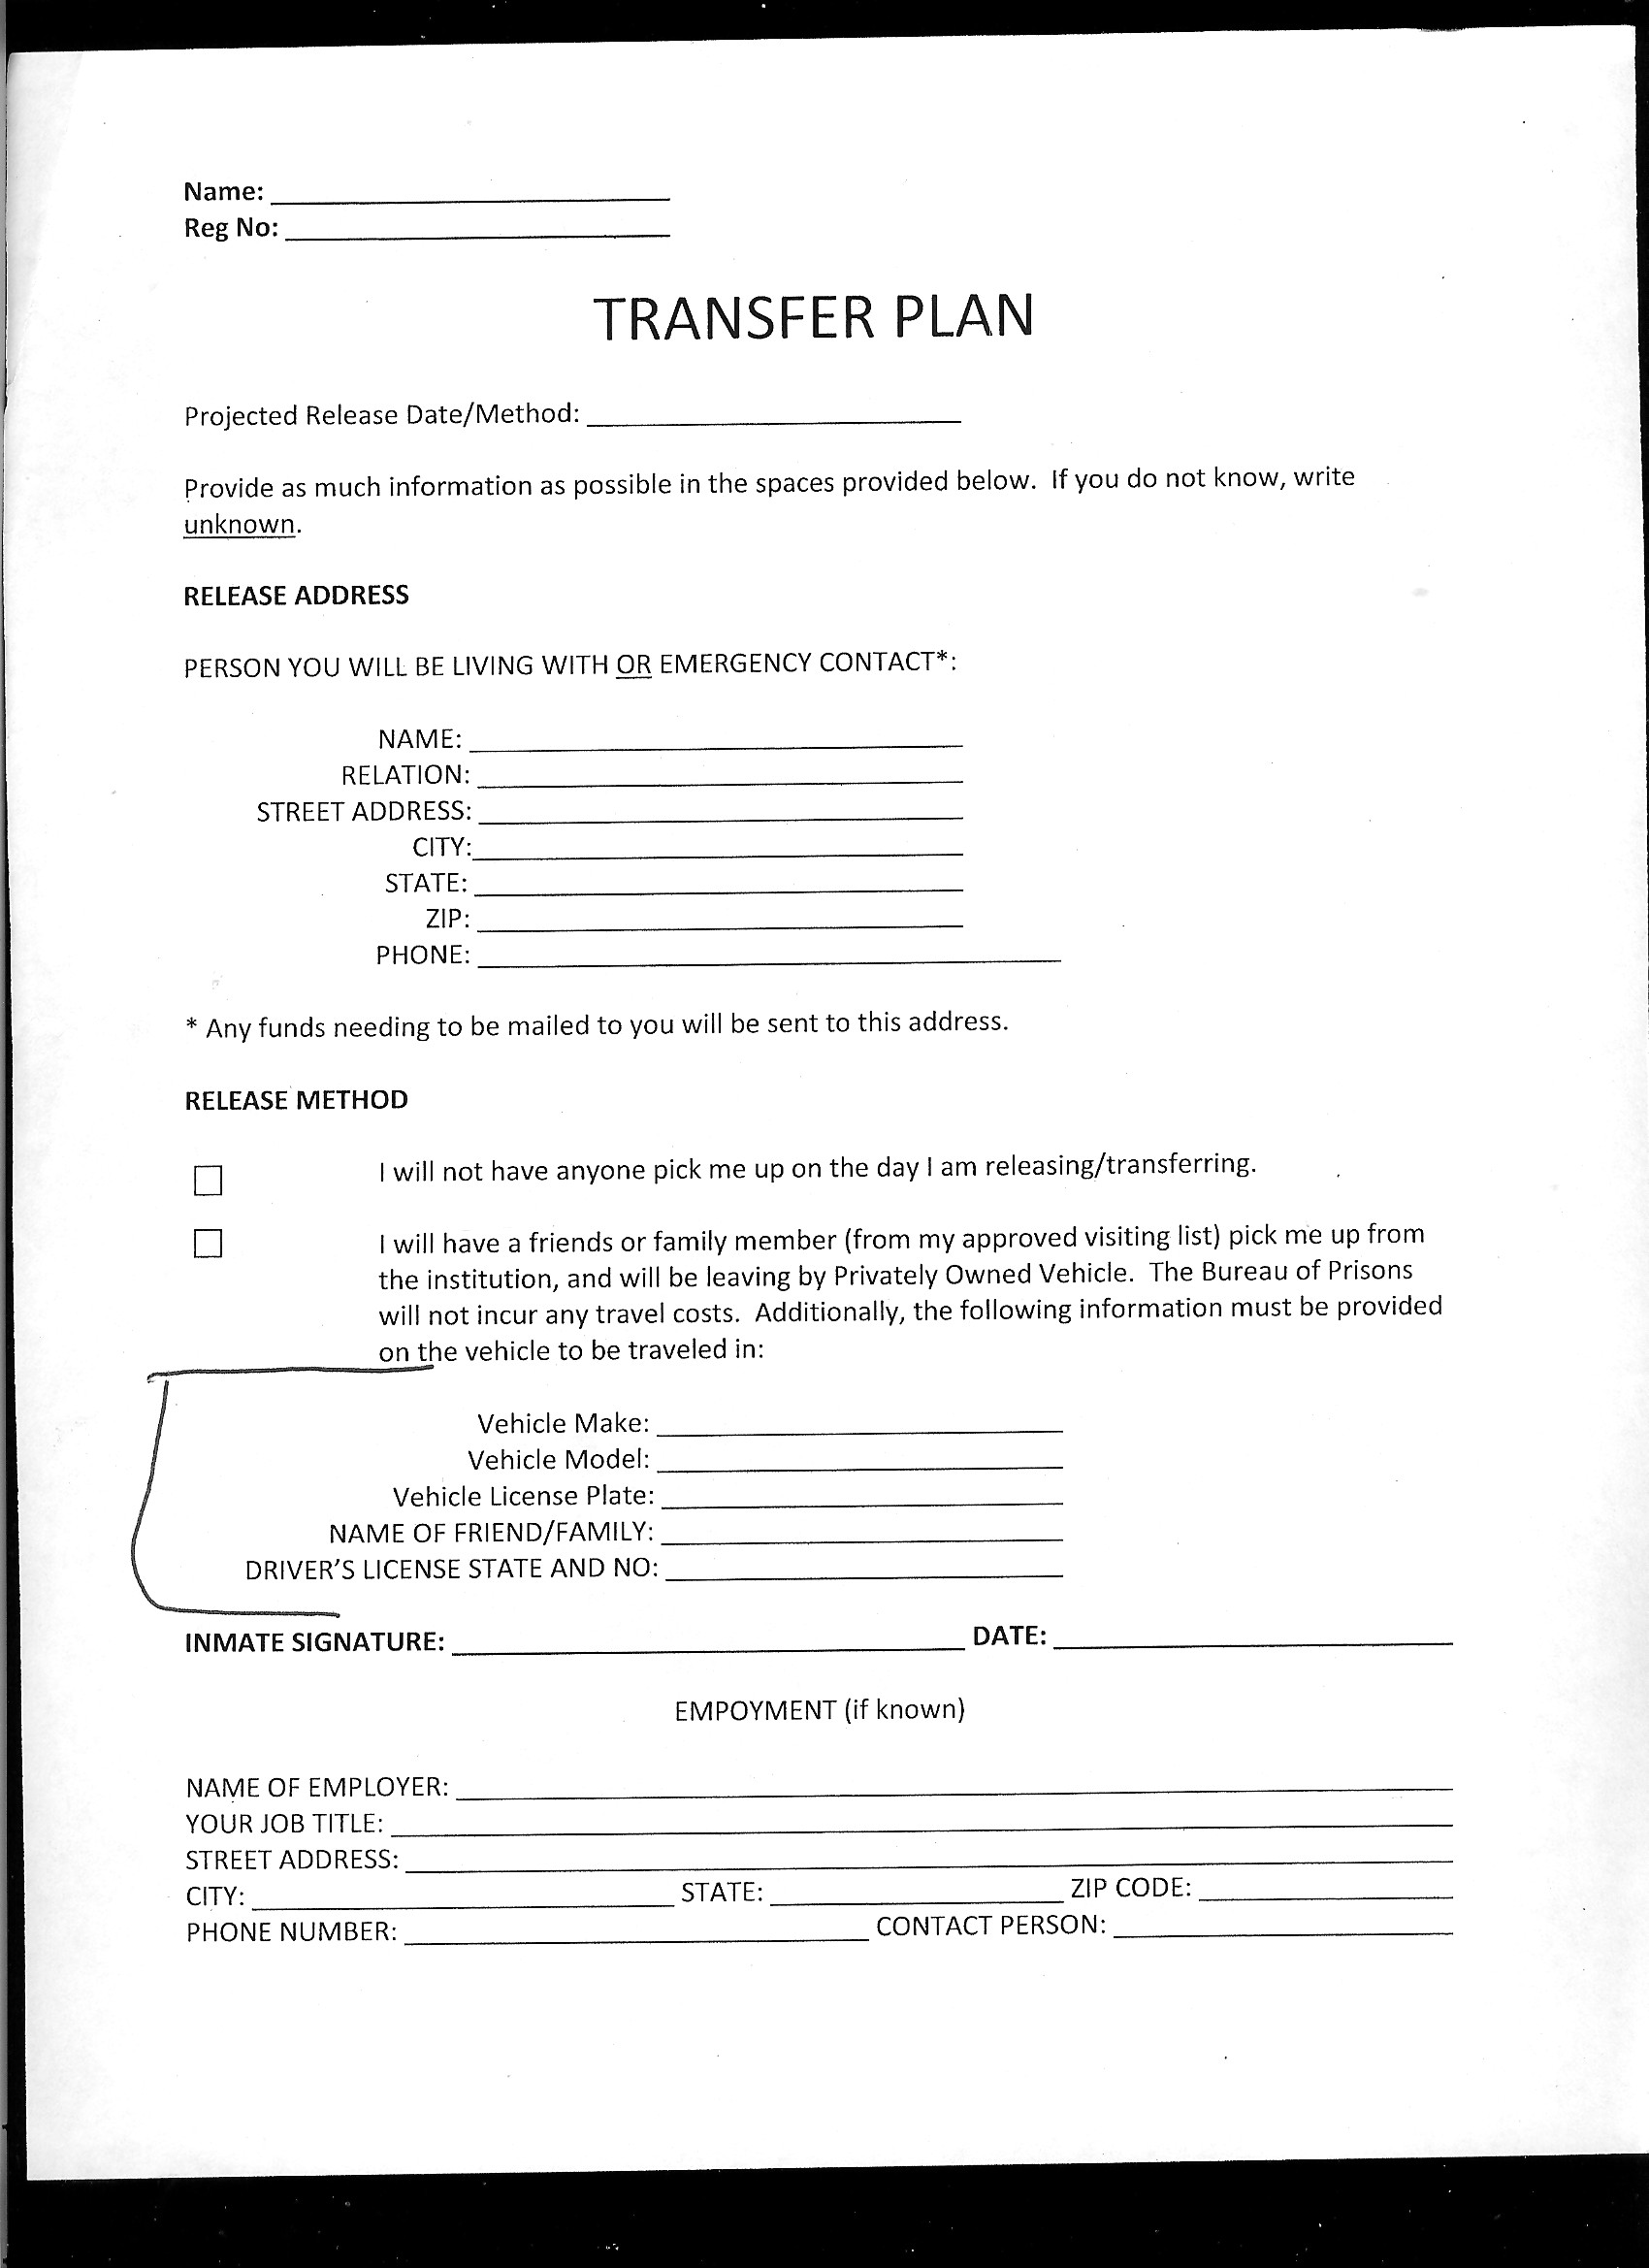 Herlong Prison Camp Transfer Plan Sheet